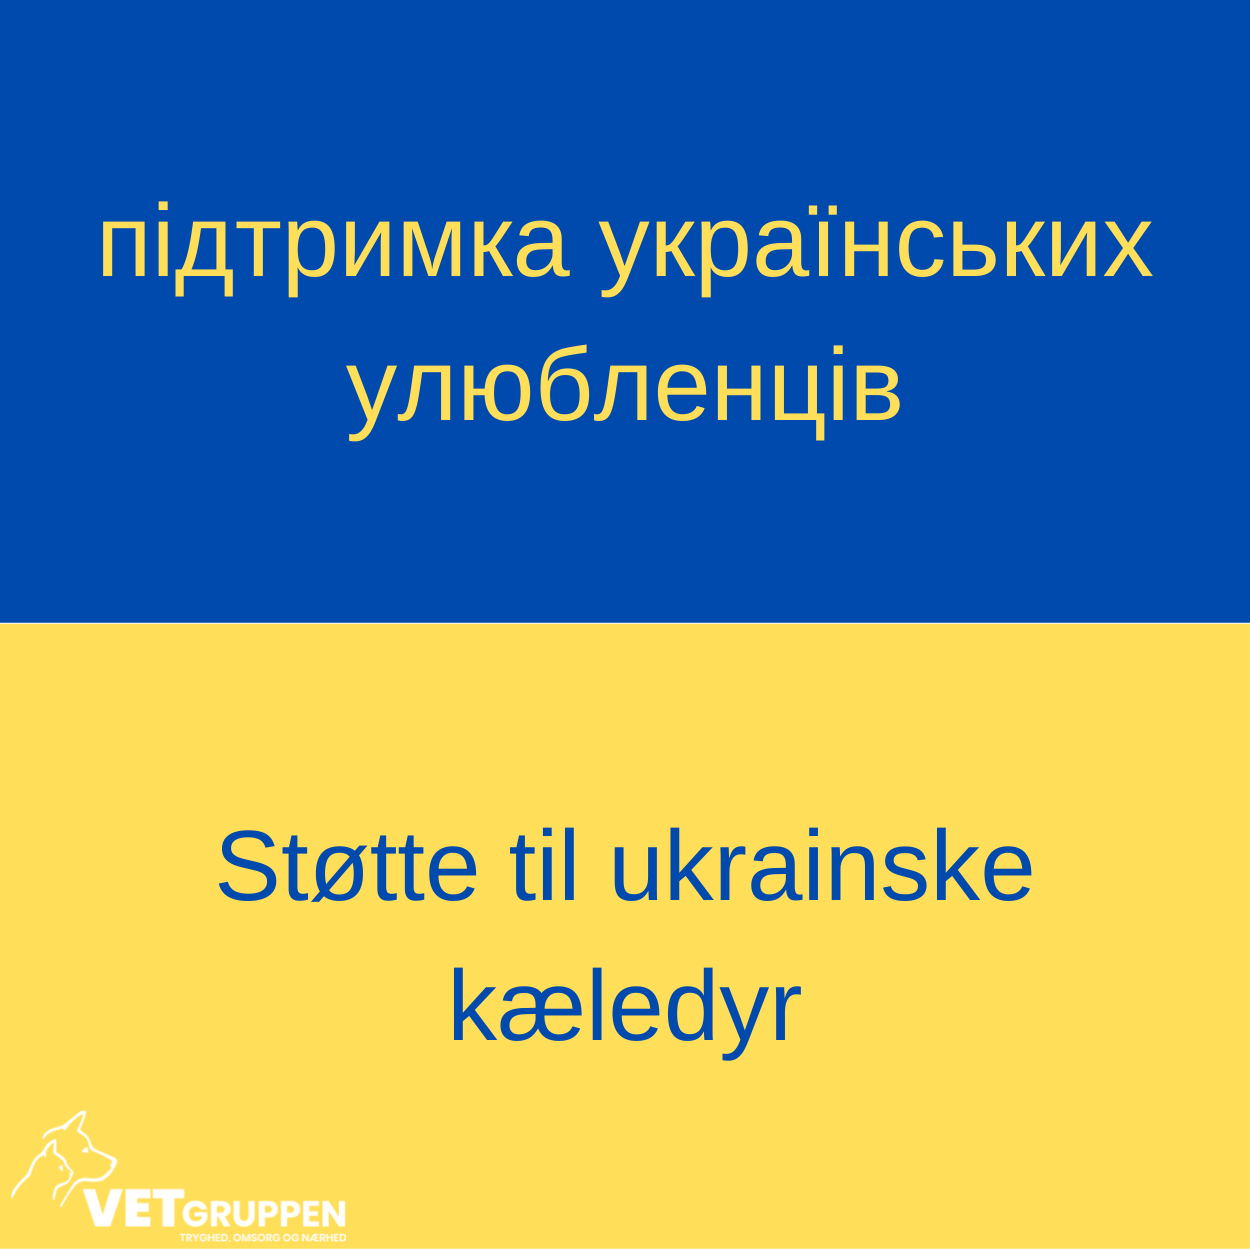 støtte til ukrainske kæledyr